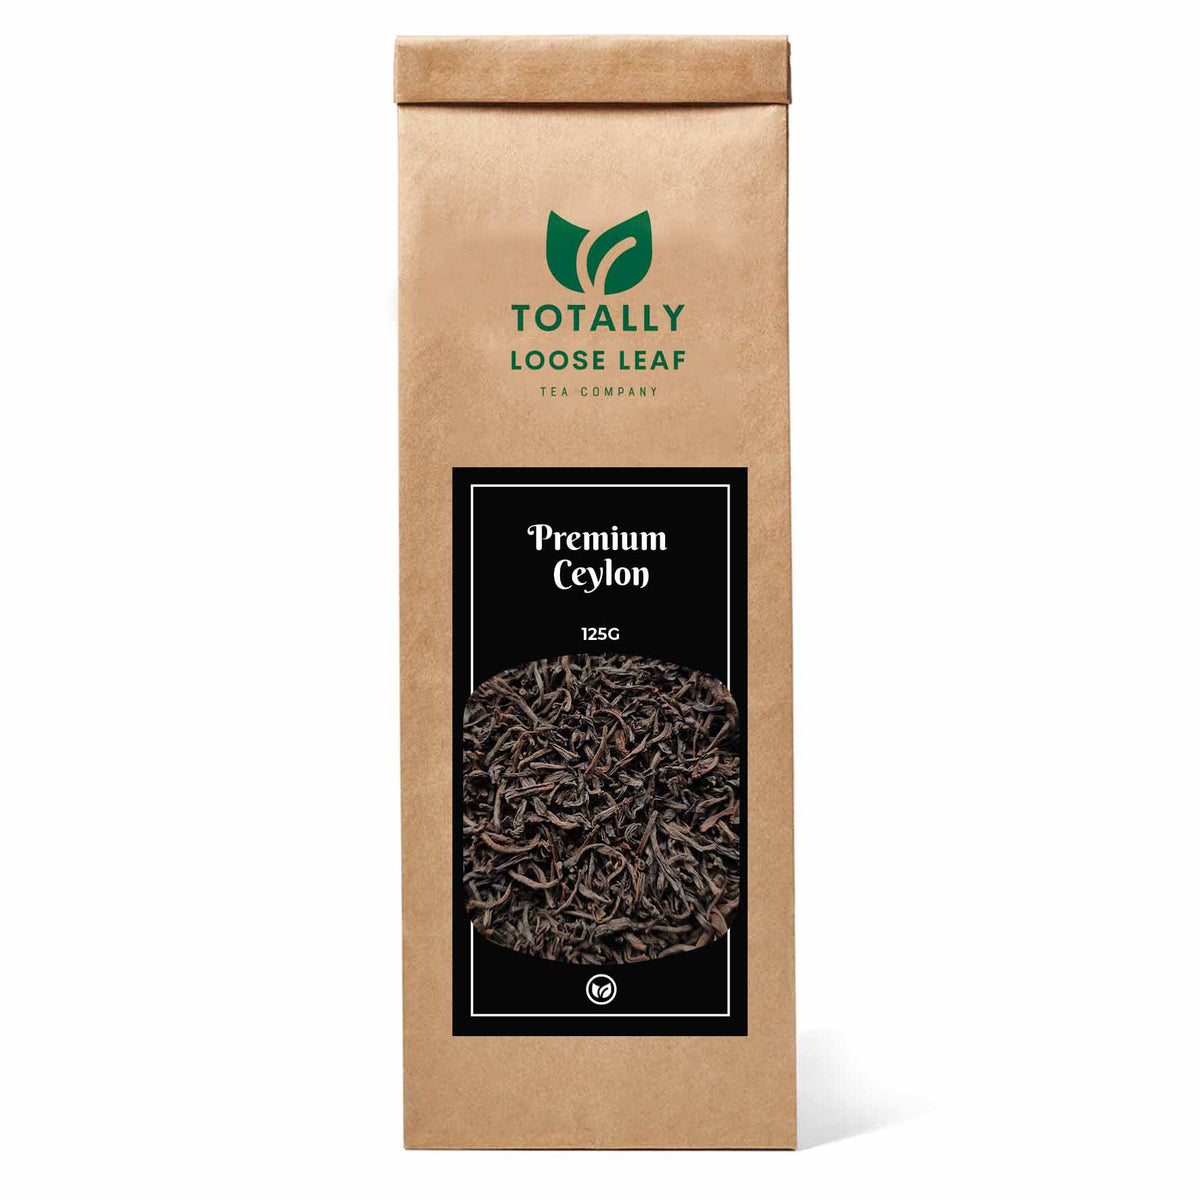 Premium Ceylon Black Estate Loose Leaf Tea - one pouch